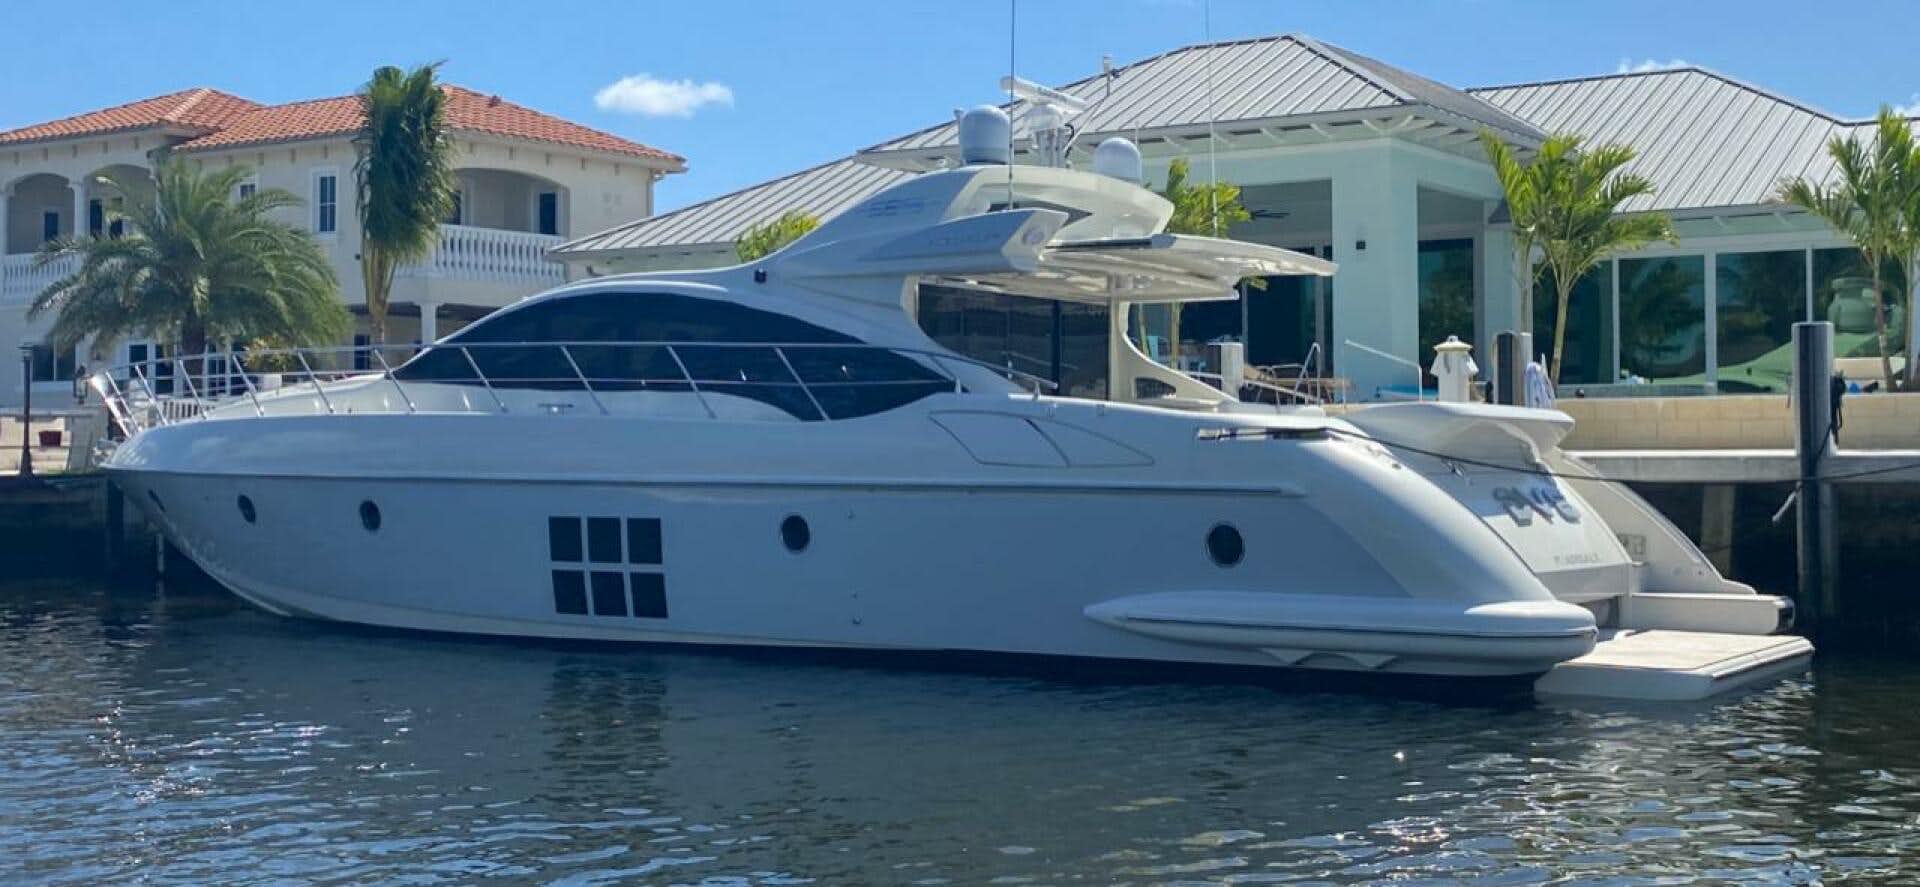 Dv8
Yacht for Sale